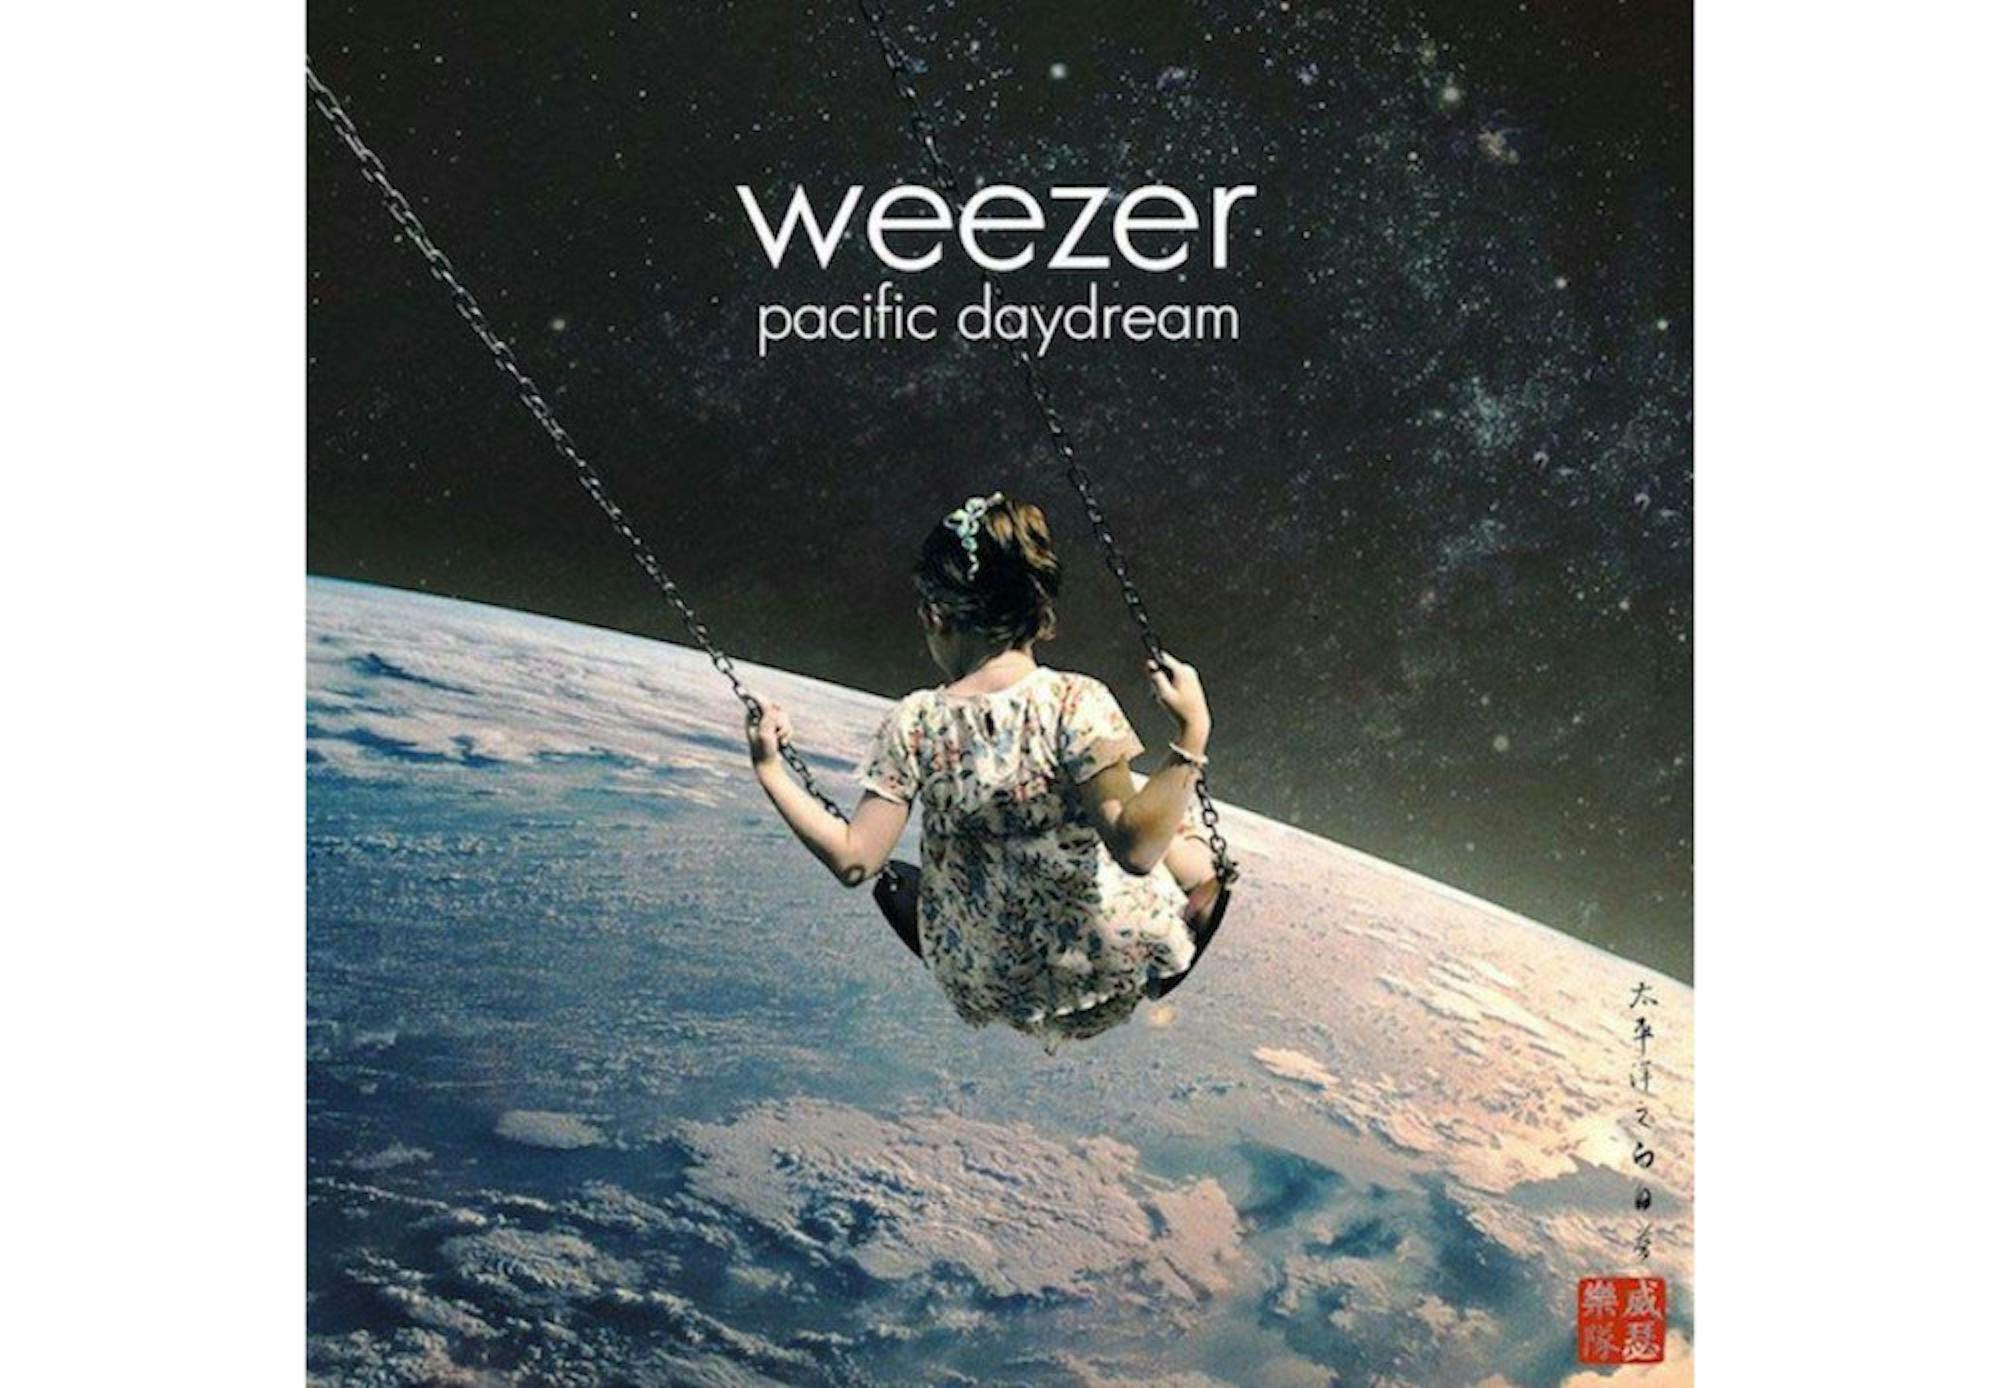 weezer-pacific-daydream-new-album-copy